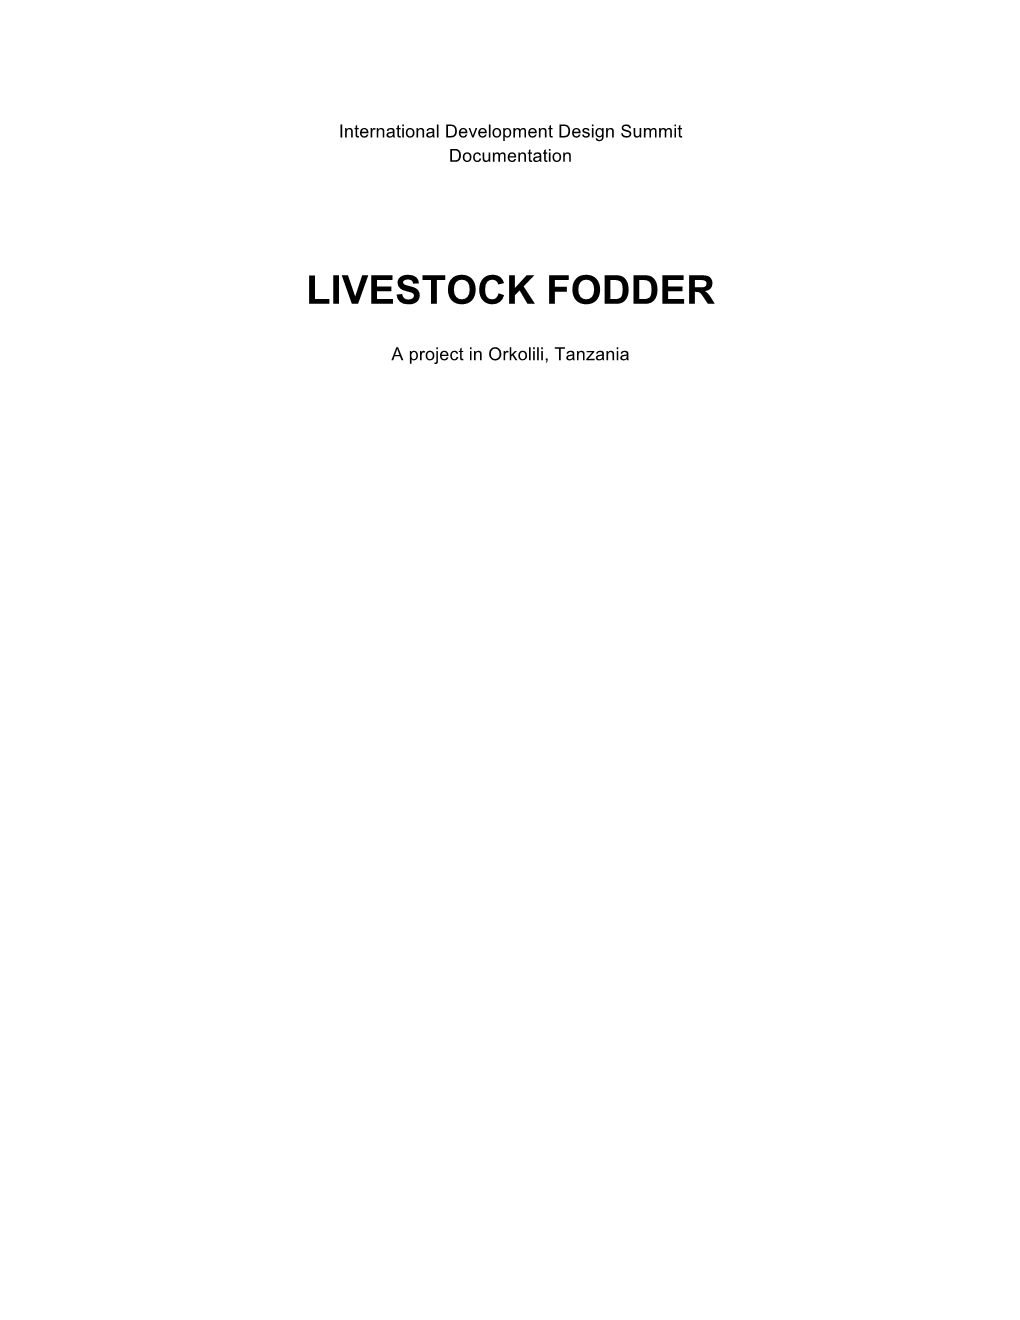 Livestock Fodder